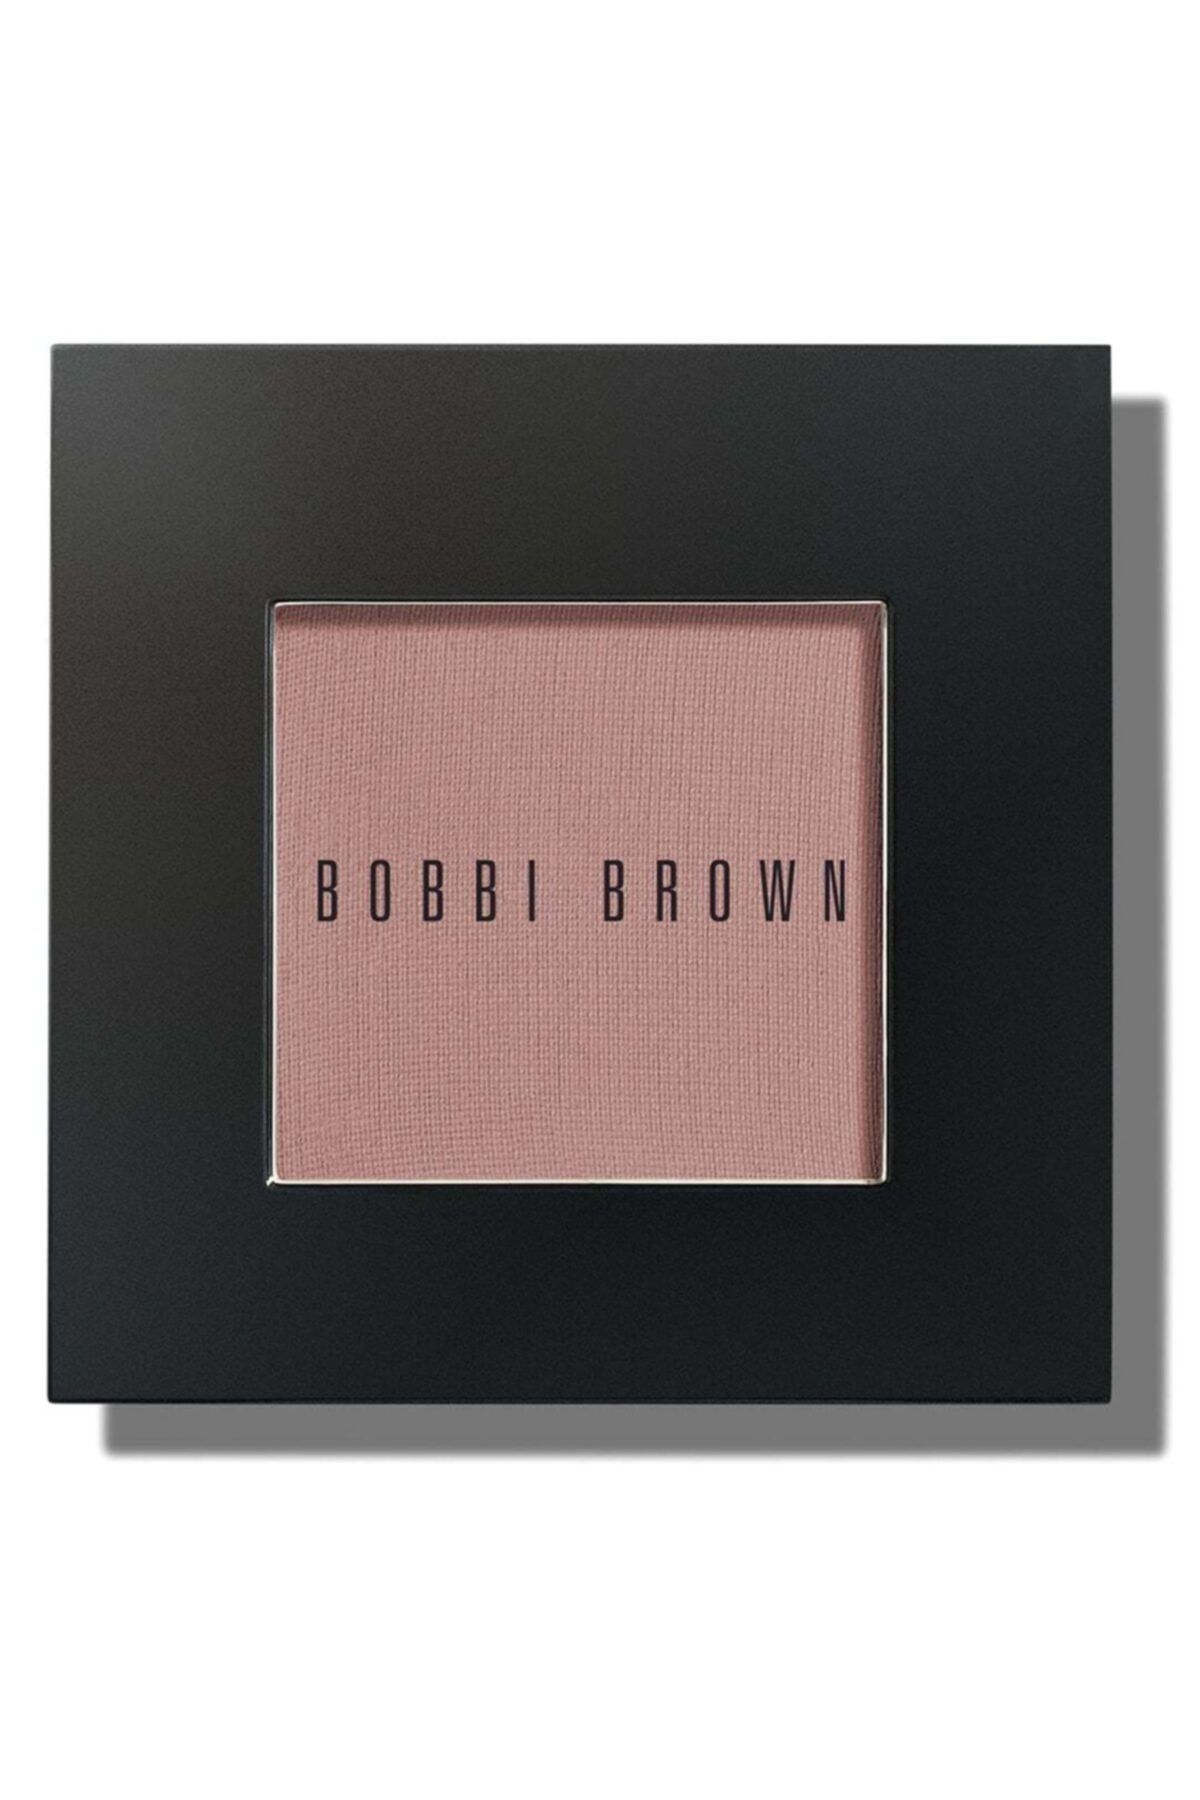 Bobbi Brown Mat Tekli Göz Farı - Antique Rose 716170088556